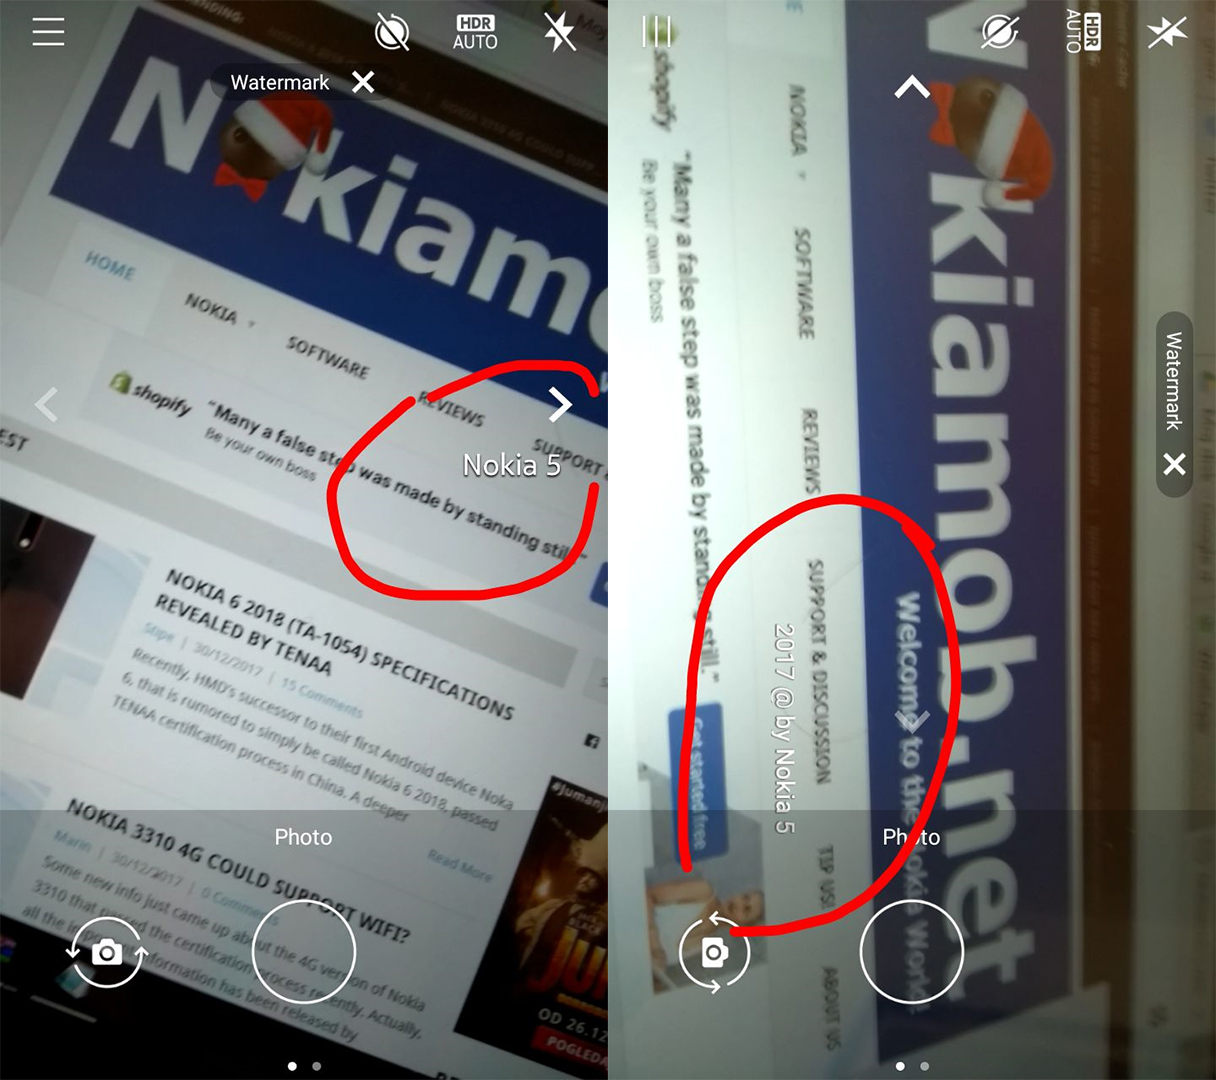 Nokia-5-watermerk-camera-app